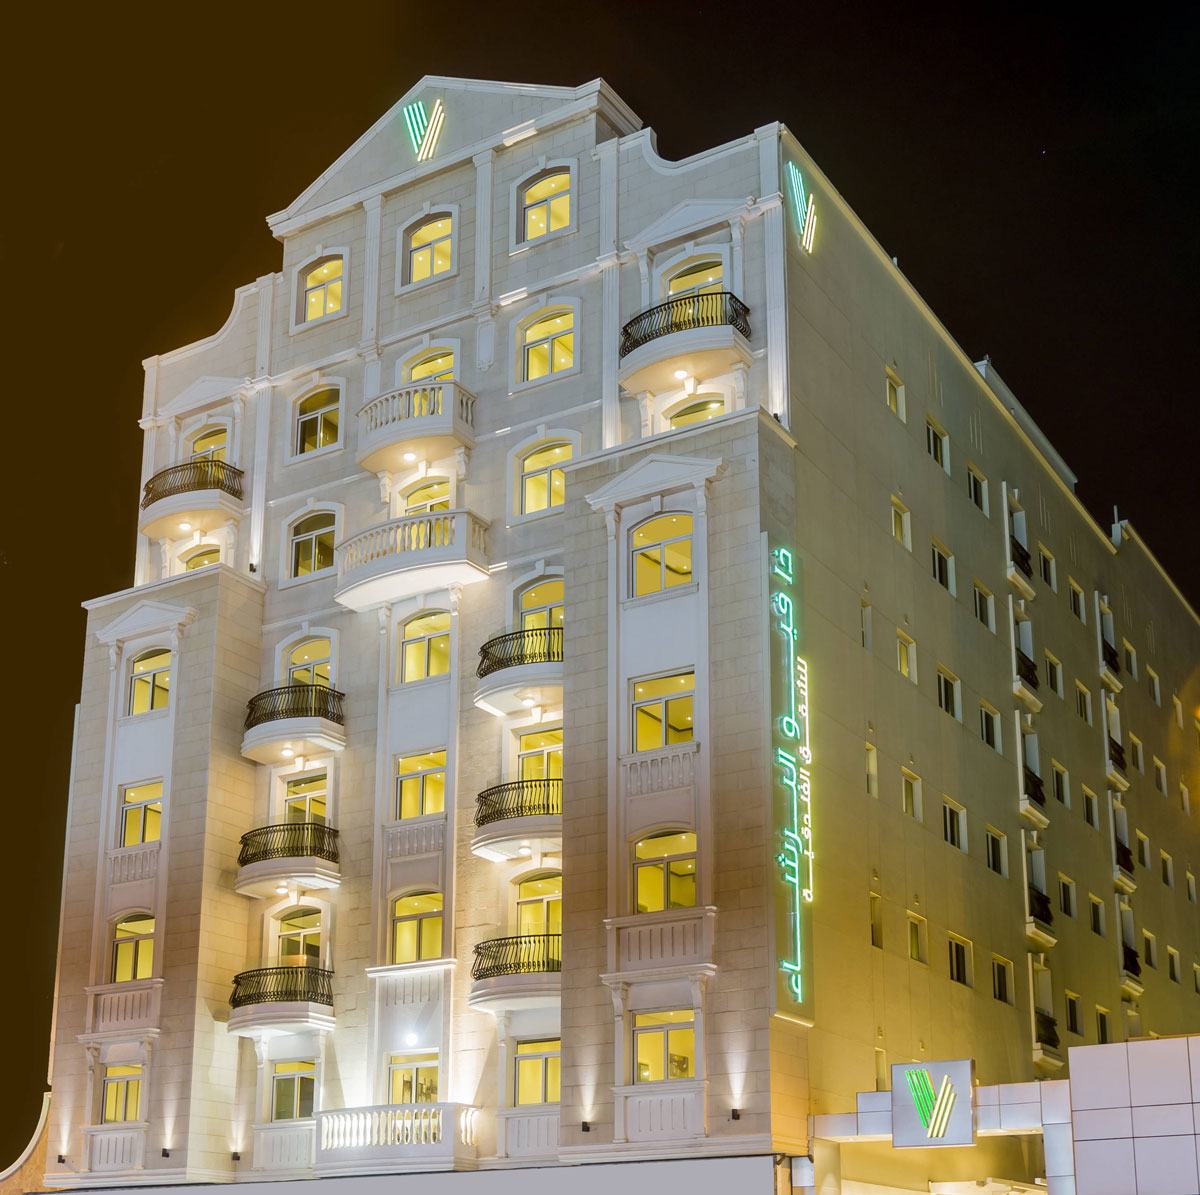 Ала вью. The s Hotel al Barsha 4 Дубай. The view al Barsha Hotel Apartments. Signuacher Hotel Dubai in Albarsha.